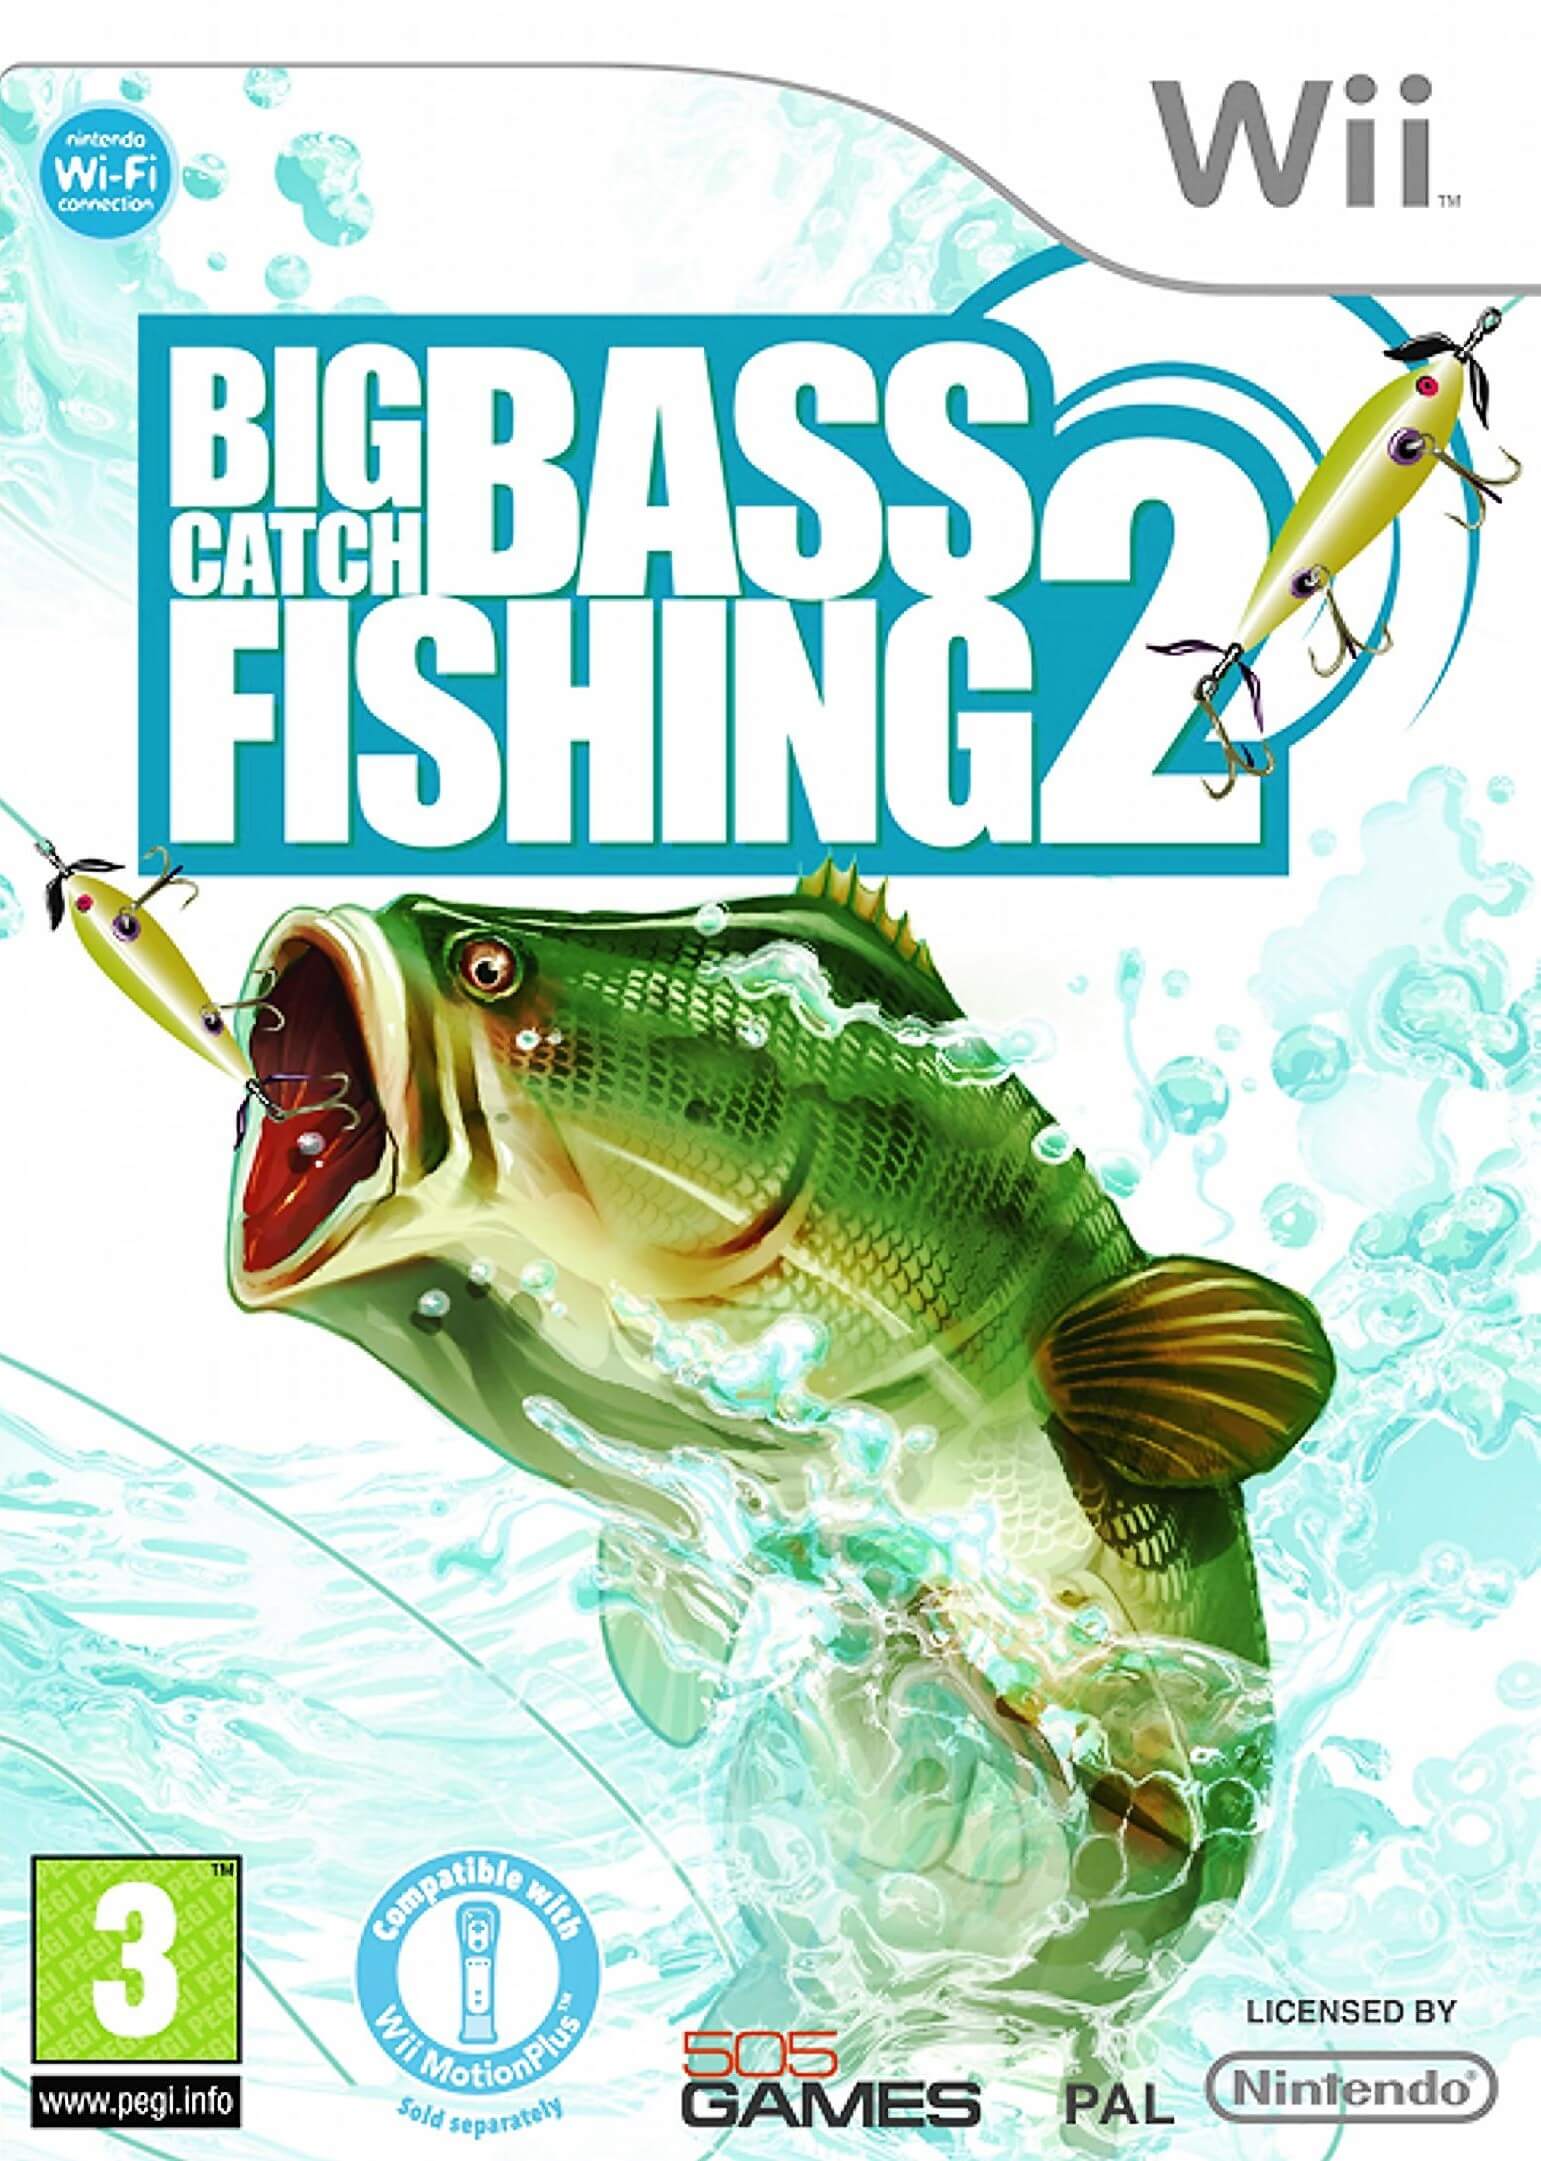 Big Catch Bass Fishing 2 ROM - Nintendo Wii Game